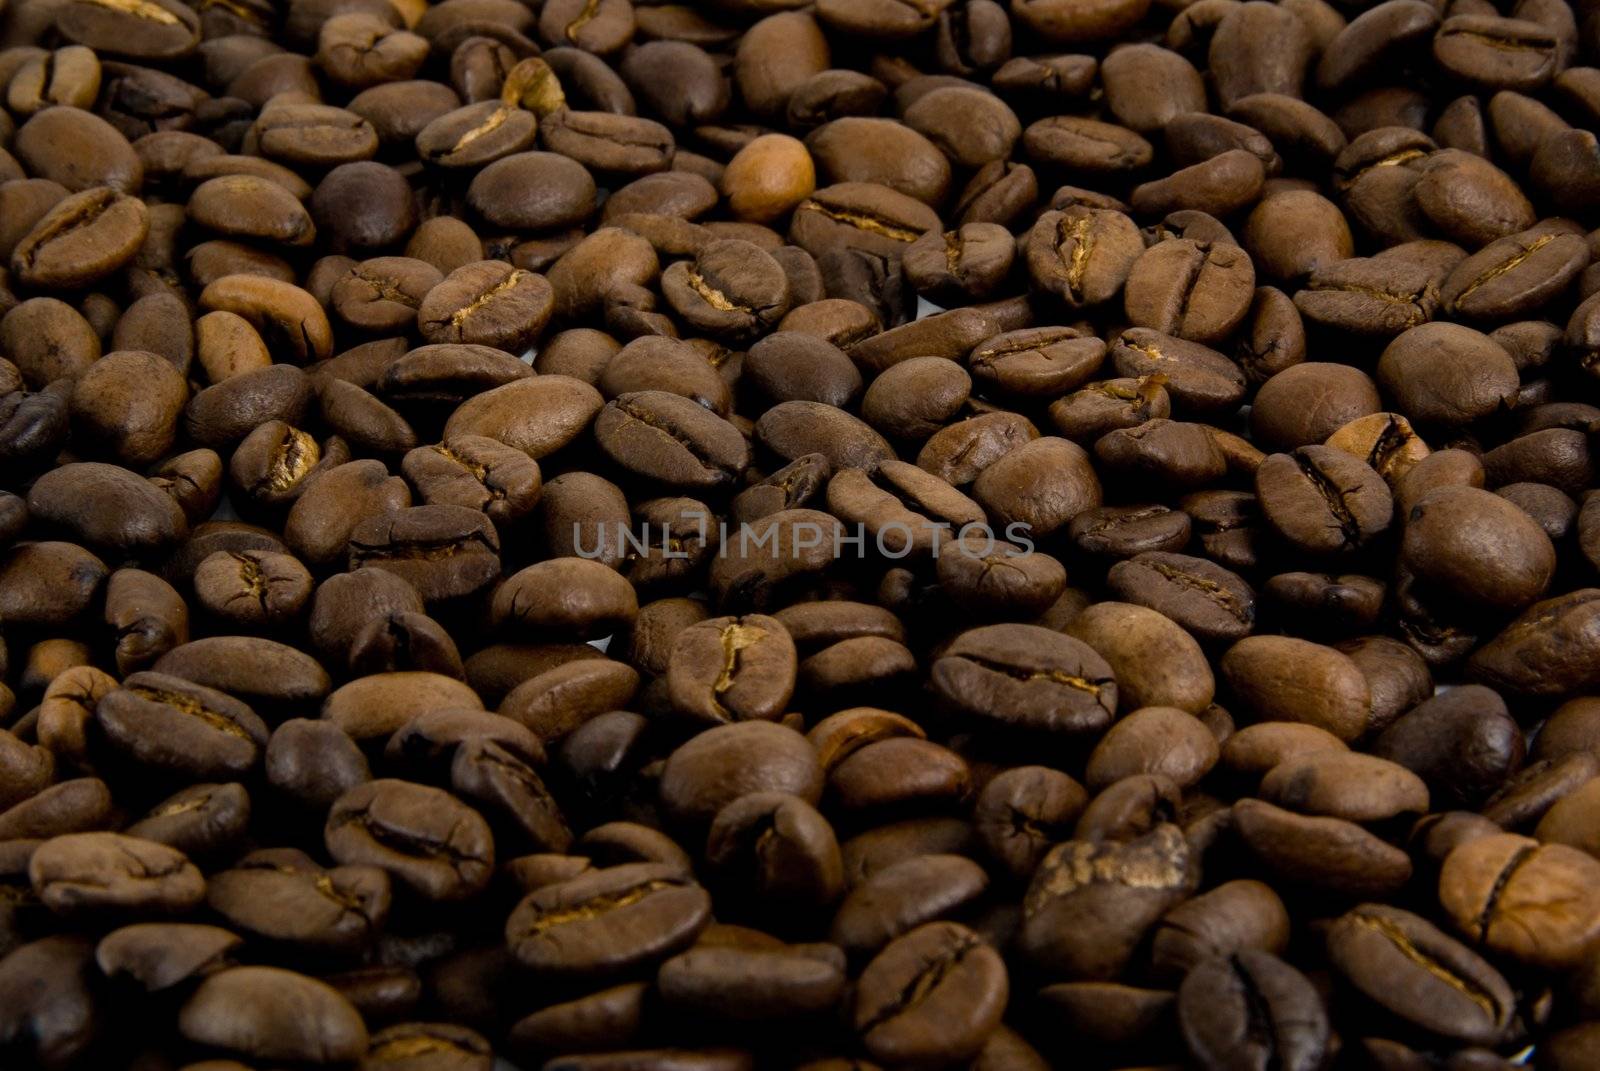 Huddle of roasted coffee